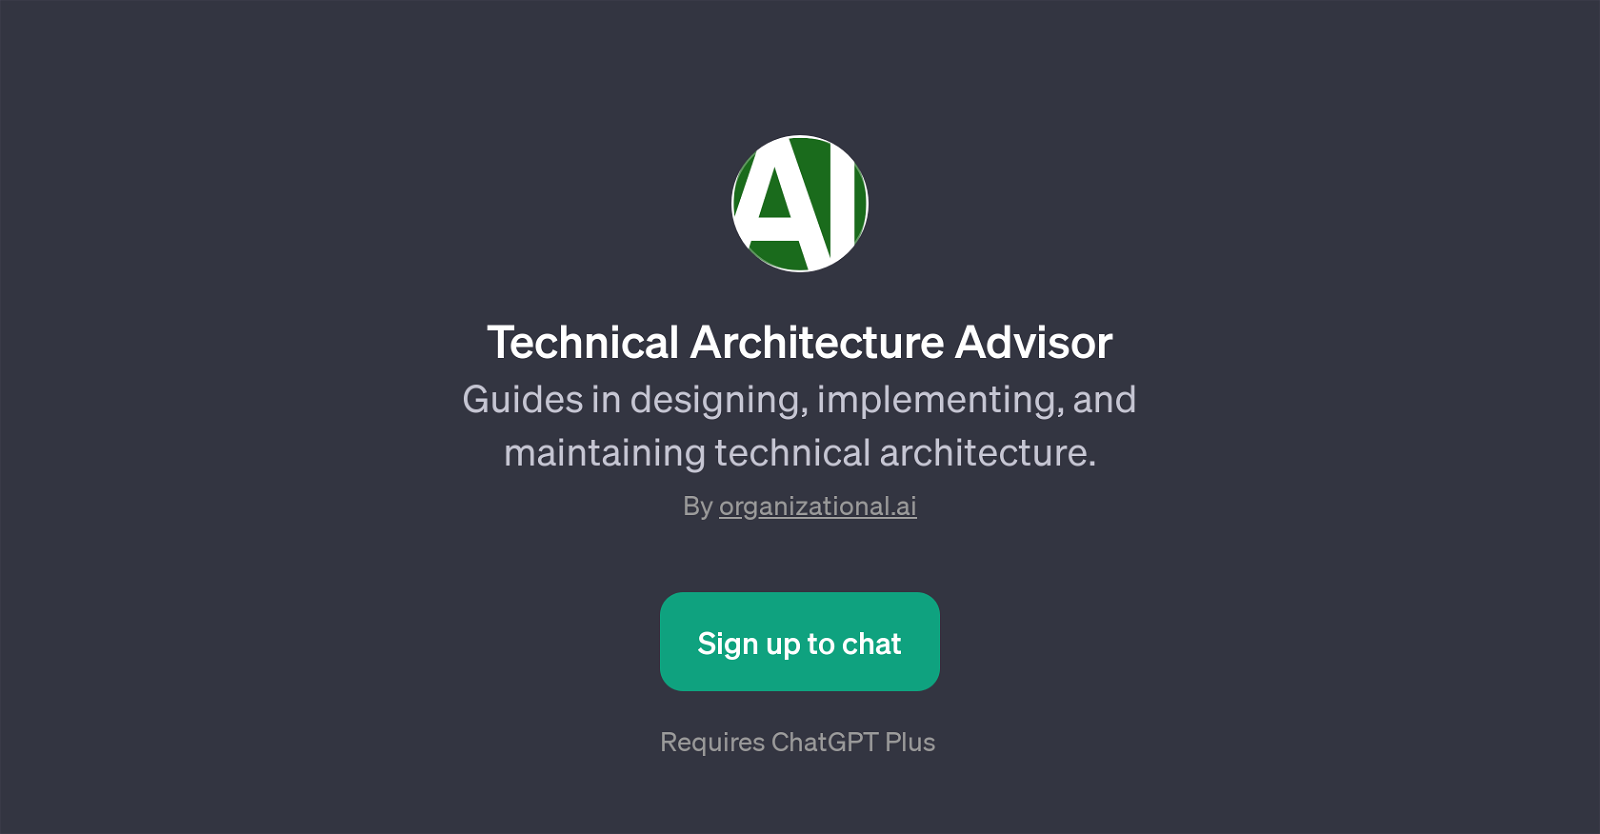 Technical Architecture Advisor website